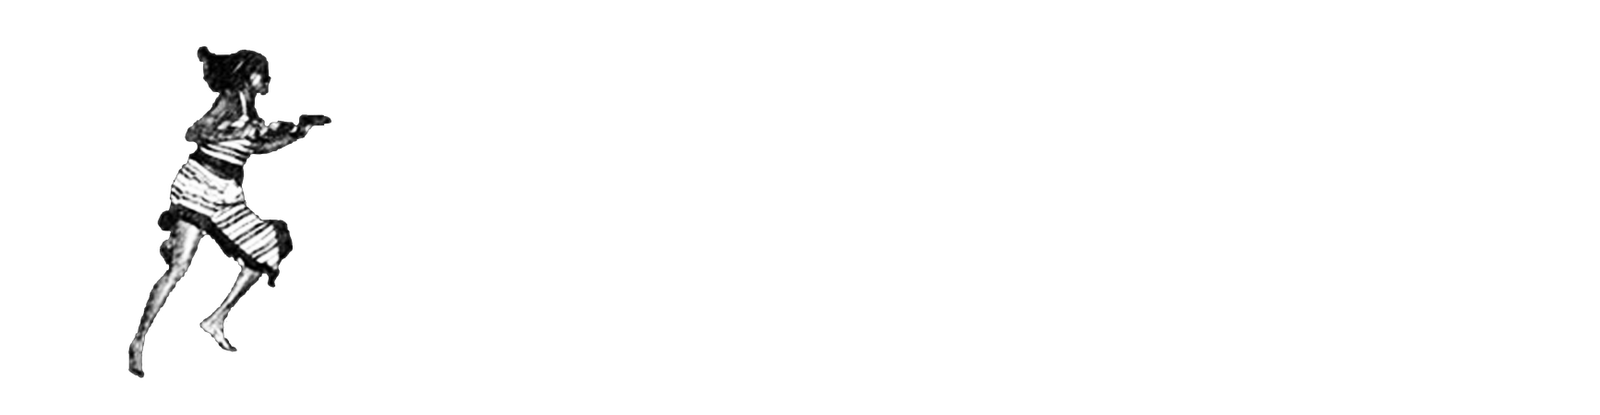 Bebe Bangoura